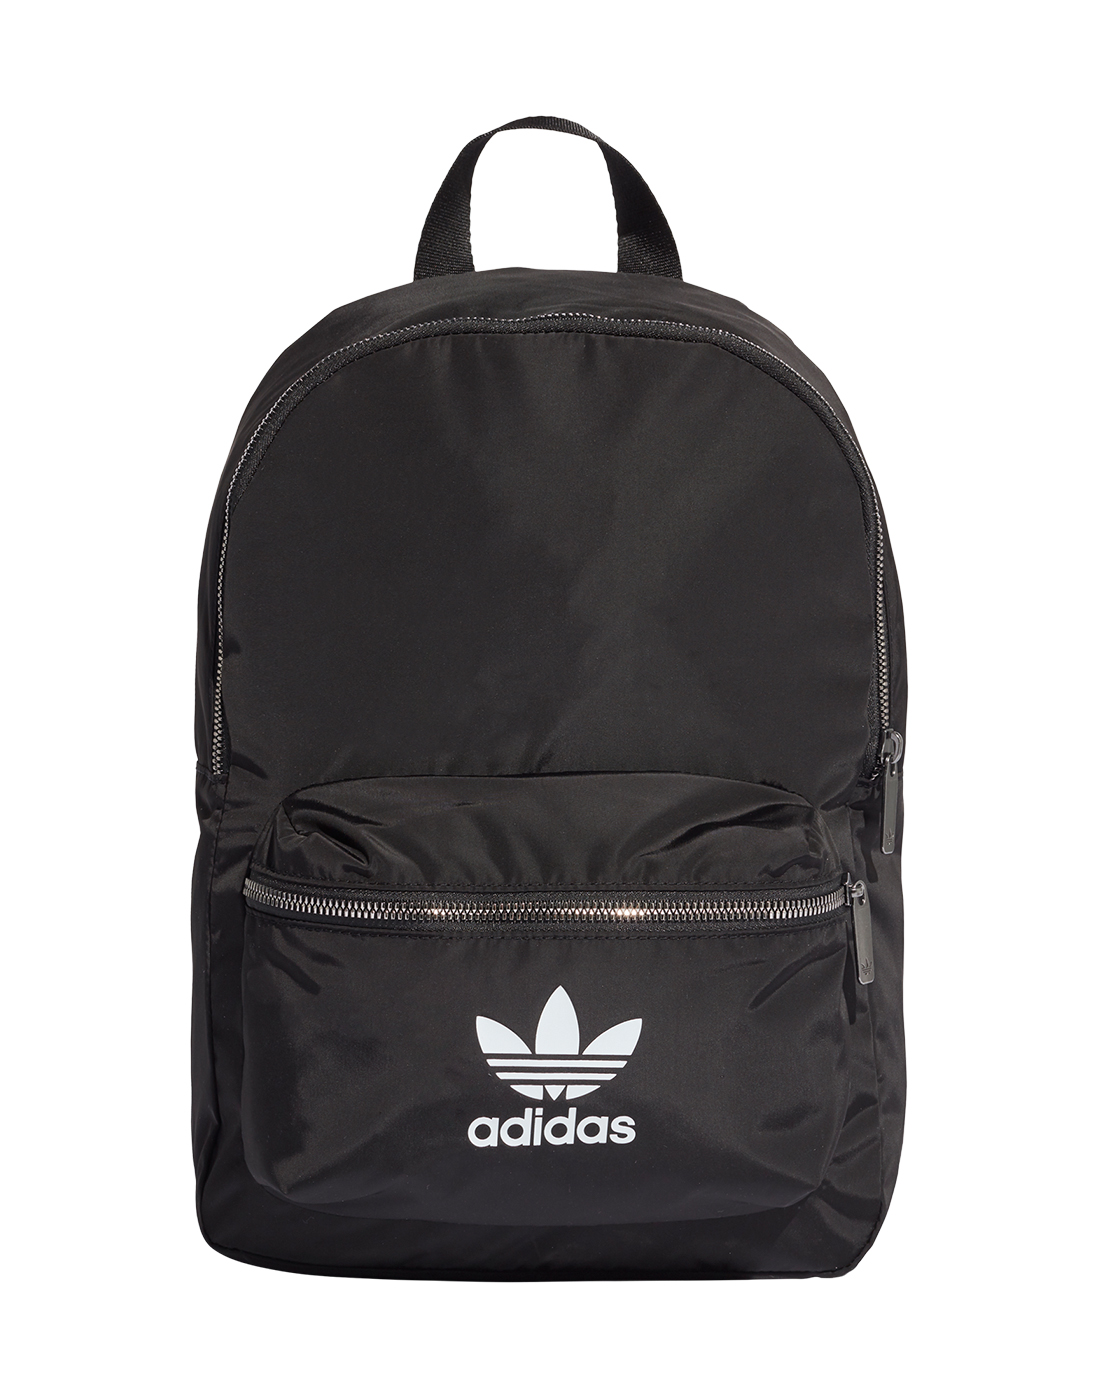 Black adidas Originals Trefoil Backpack | Life Style Sports